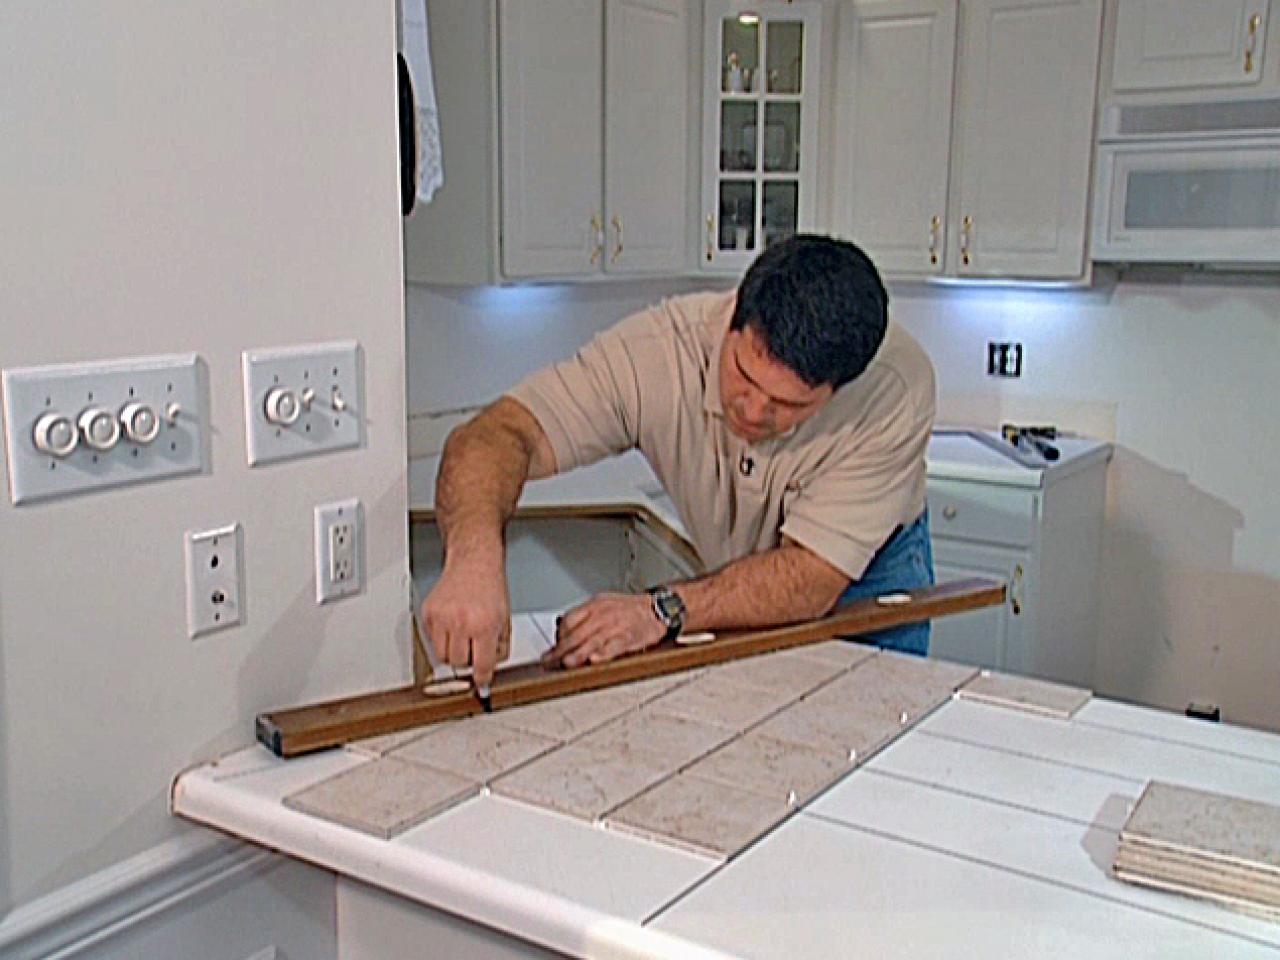 Install Tile Over Laminate Countertop, Can You Glue New Laminate Over Old Countertops